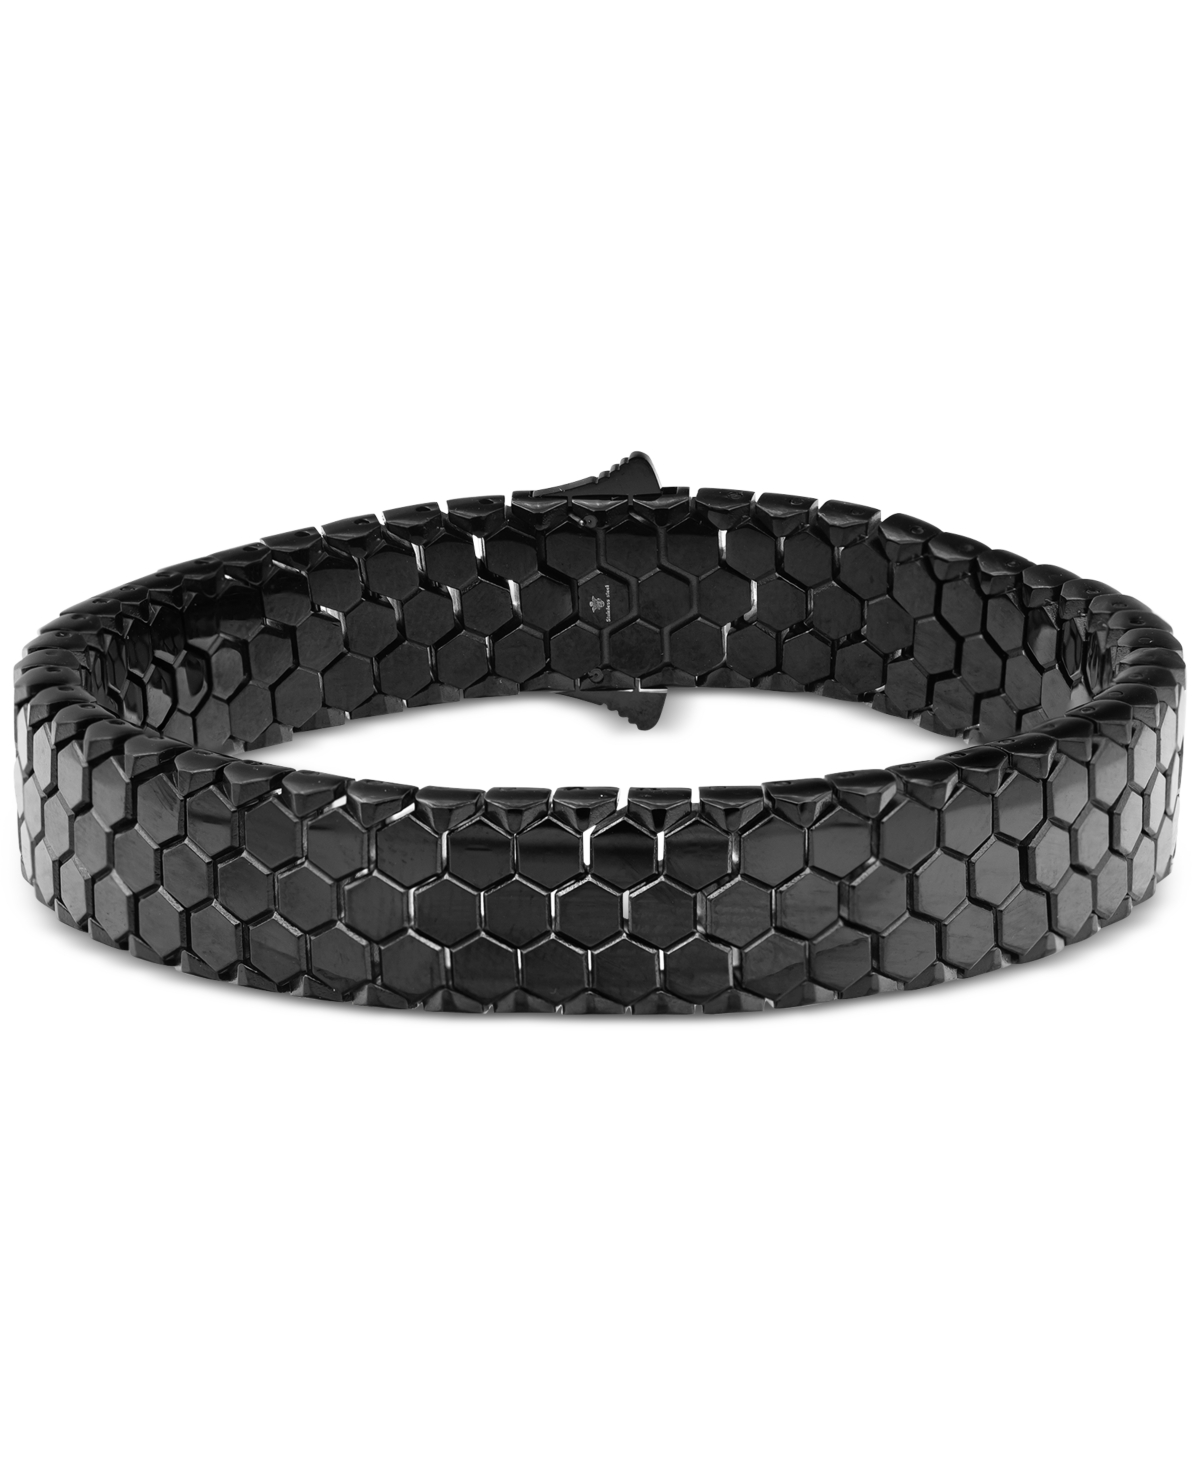 Men's Hexagon Honeycomb Textured Link Bracelet in Black-Ion Plated Stainless Steel - Black